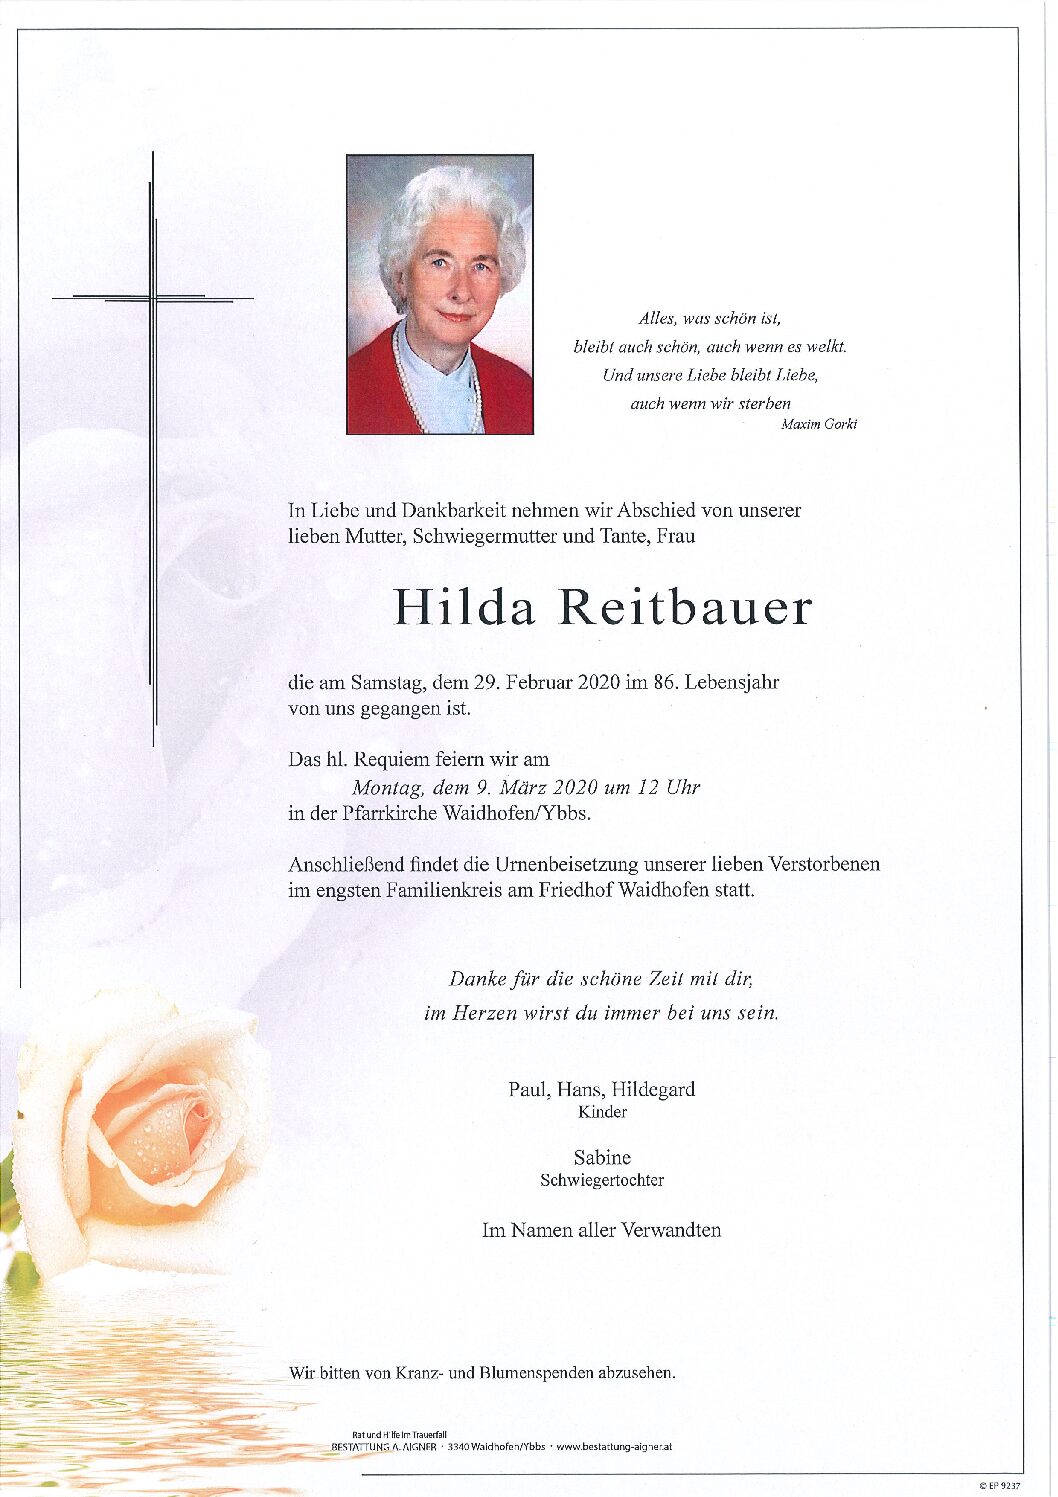 Hilda Reitbauer